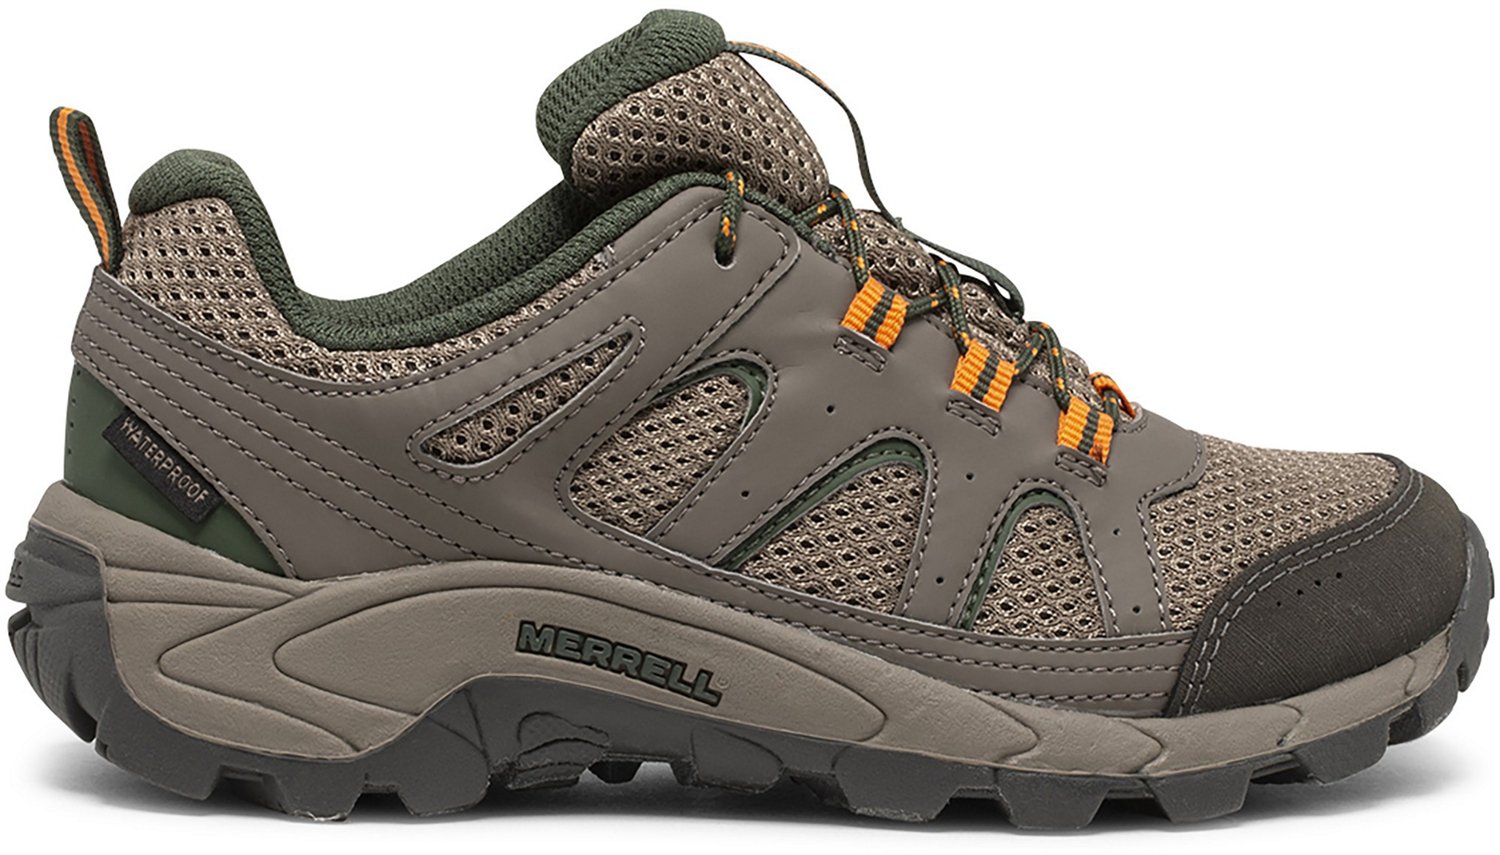 Merrell Boys' Oakcreek Hiking Shoes | Free Shipping at Academy